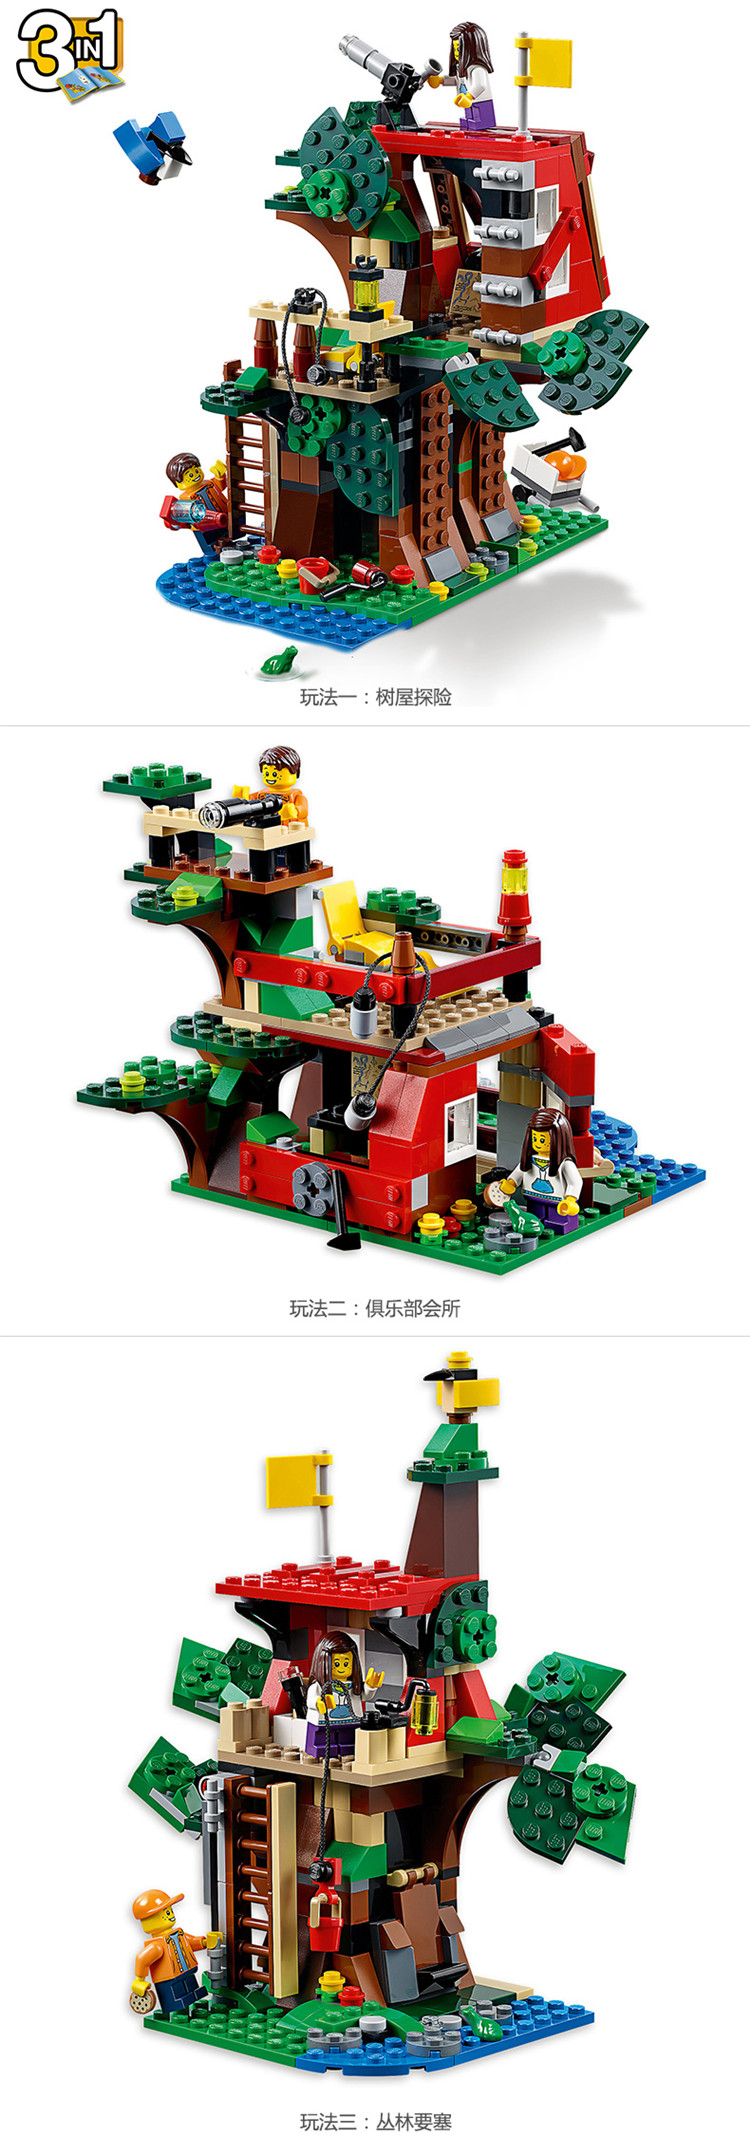 LEGO 乐高- 创意三合一系列 Creator树屋探险LEGC31053